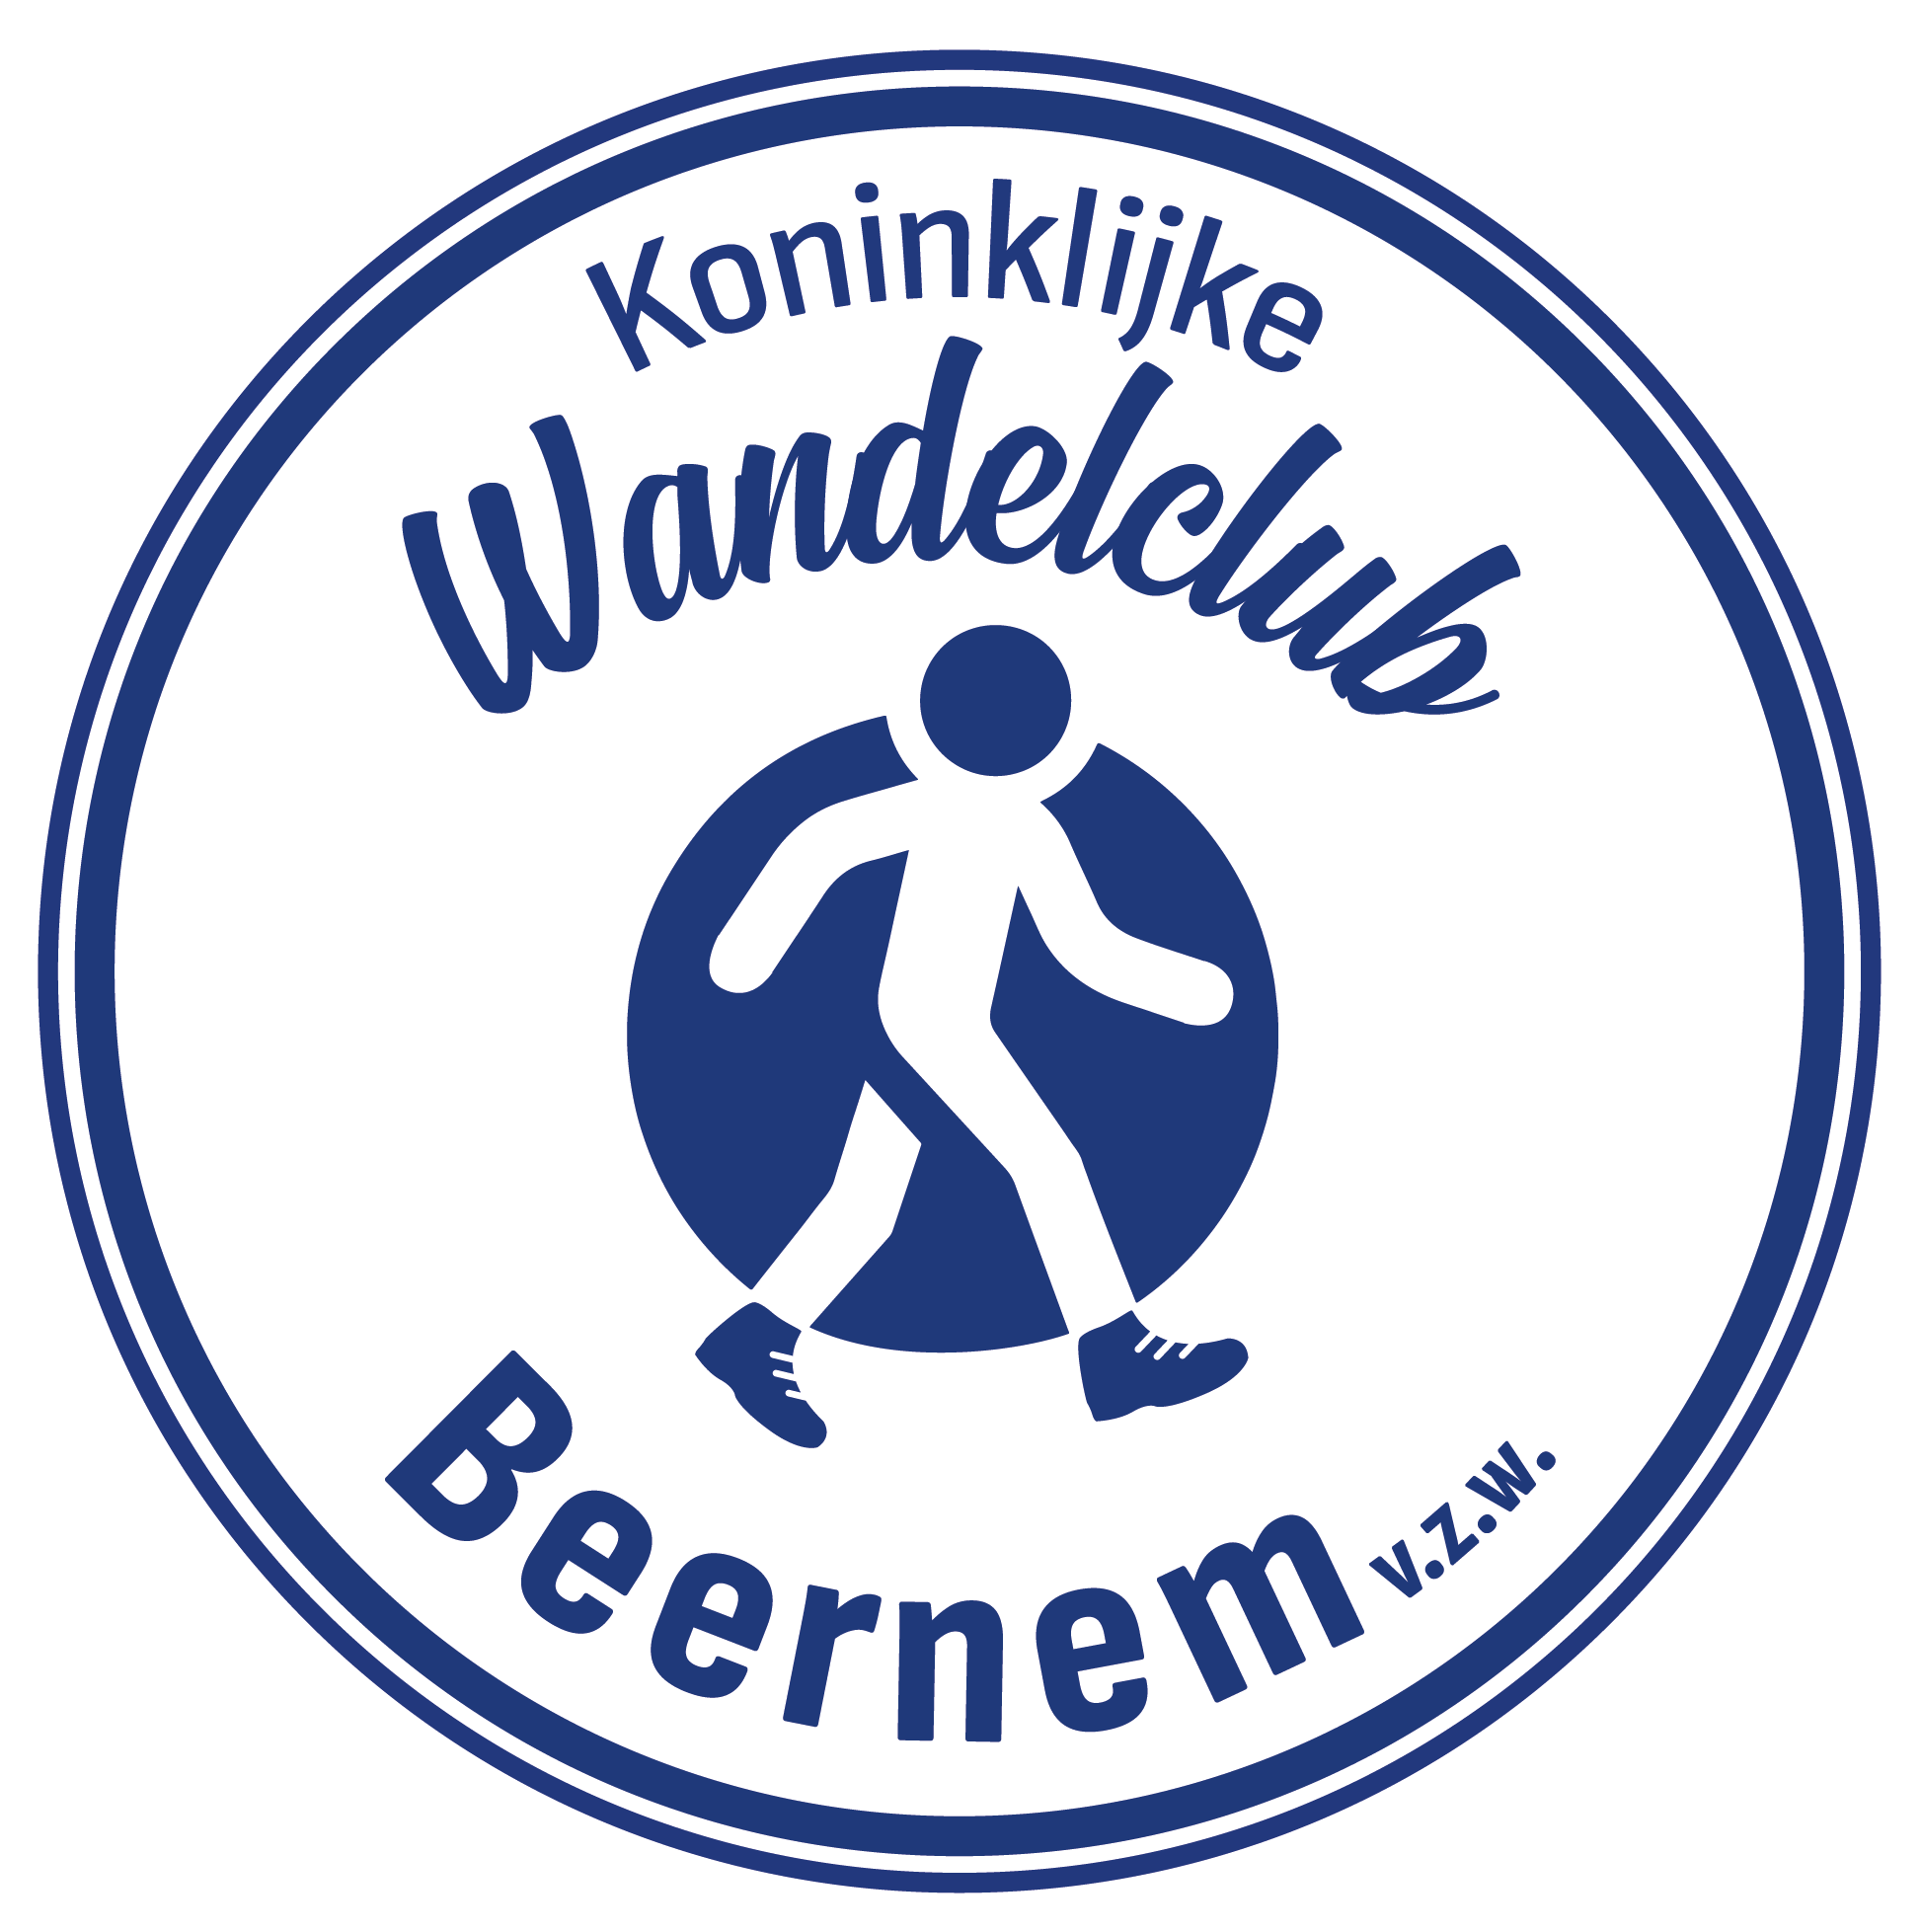 Wandelclub Beernem vzw